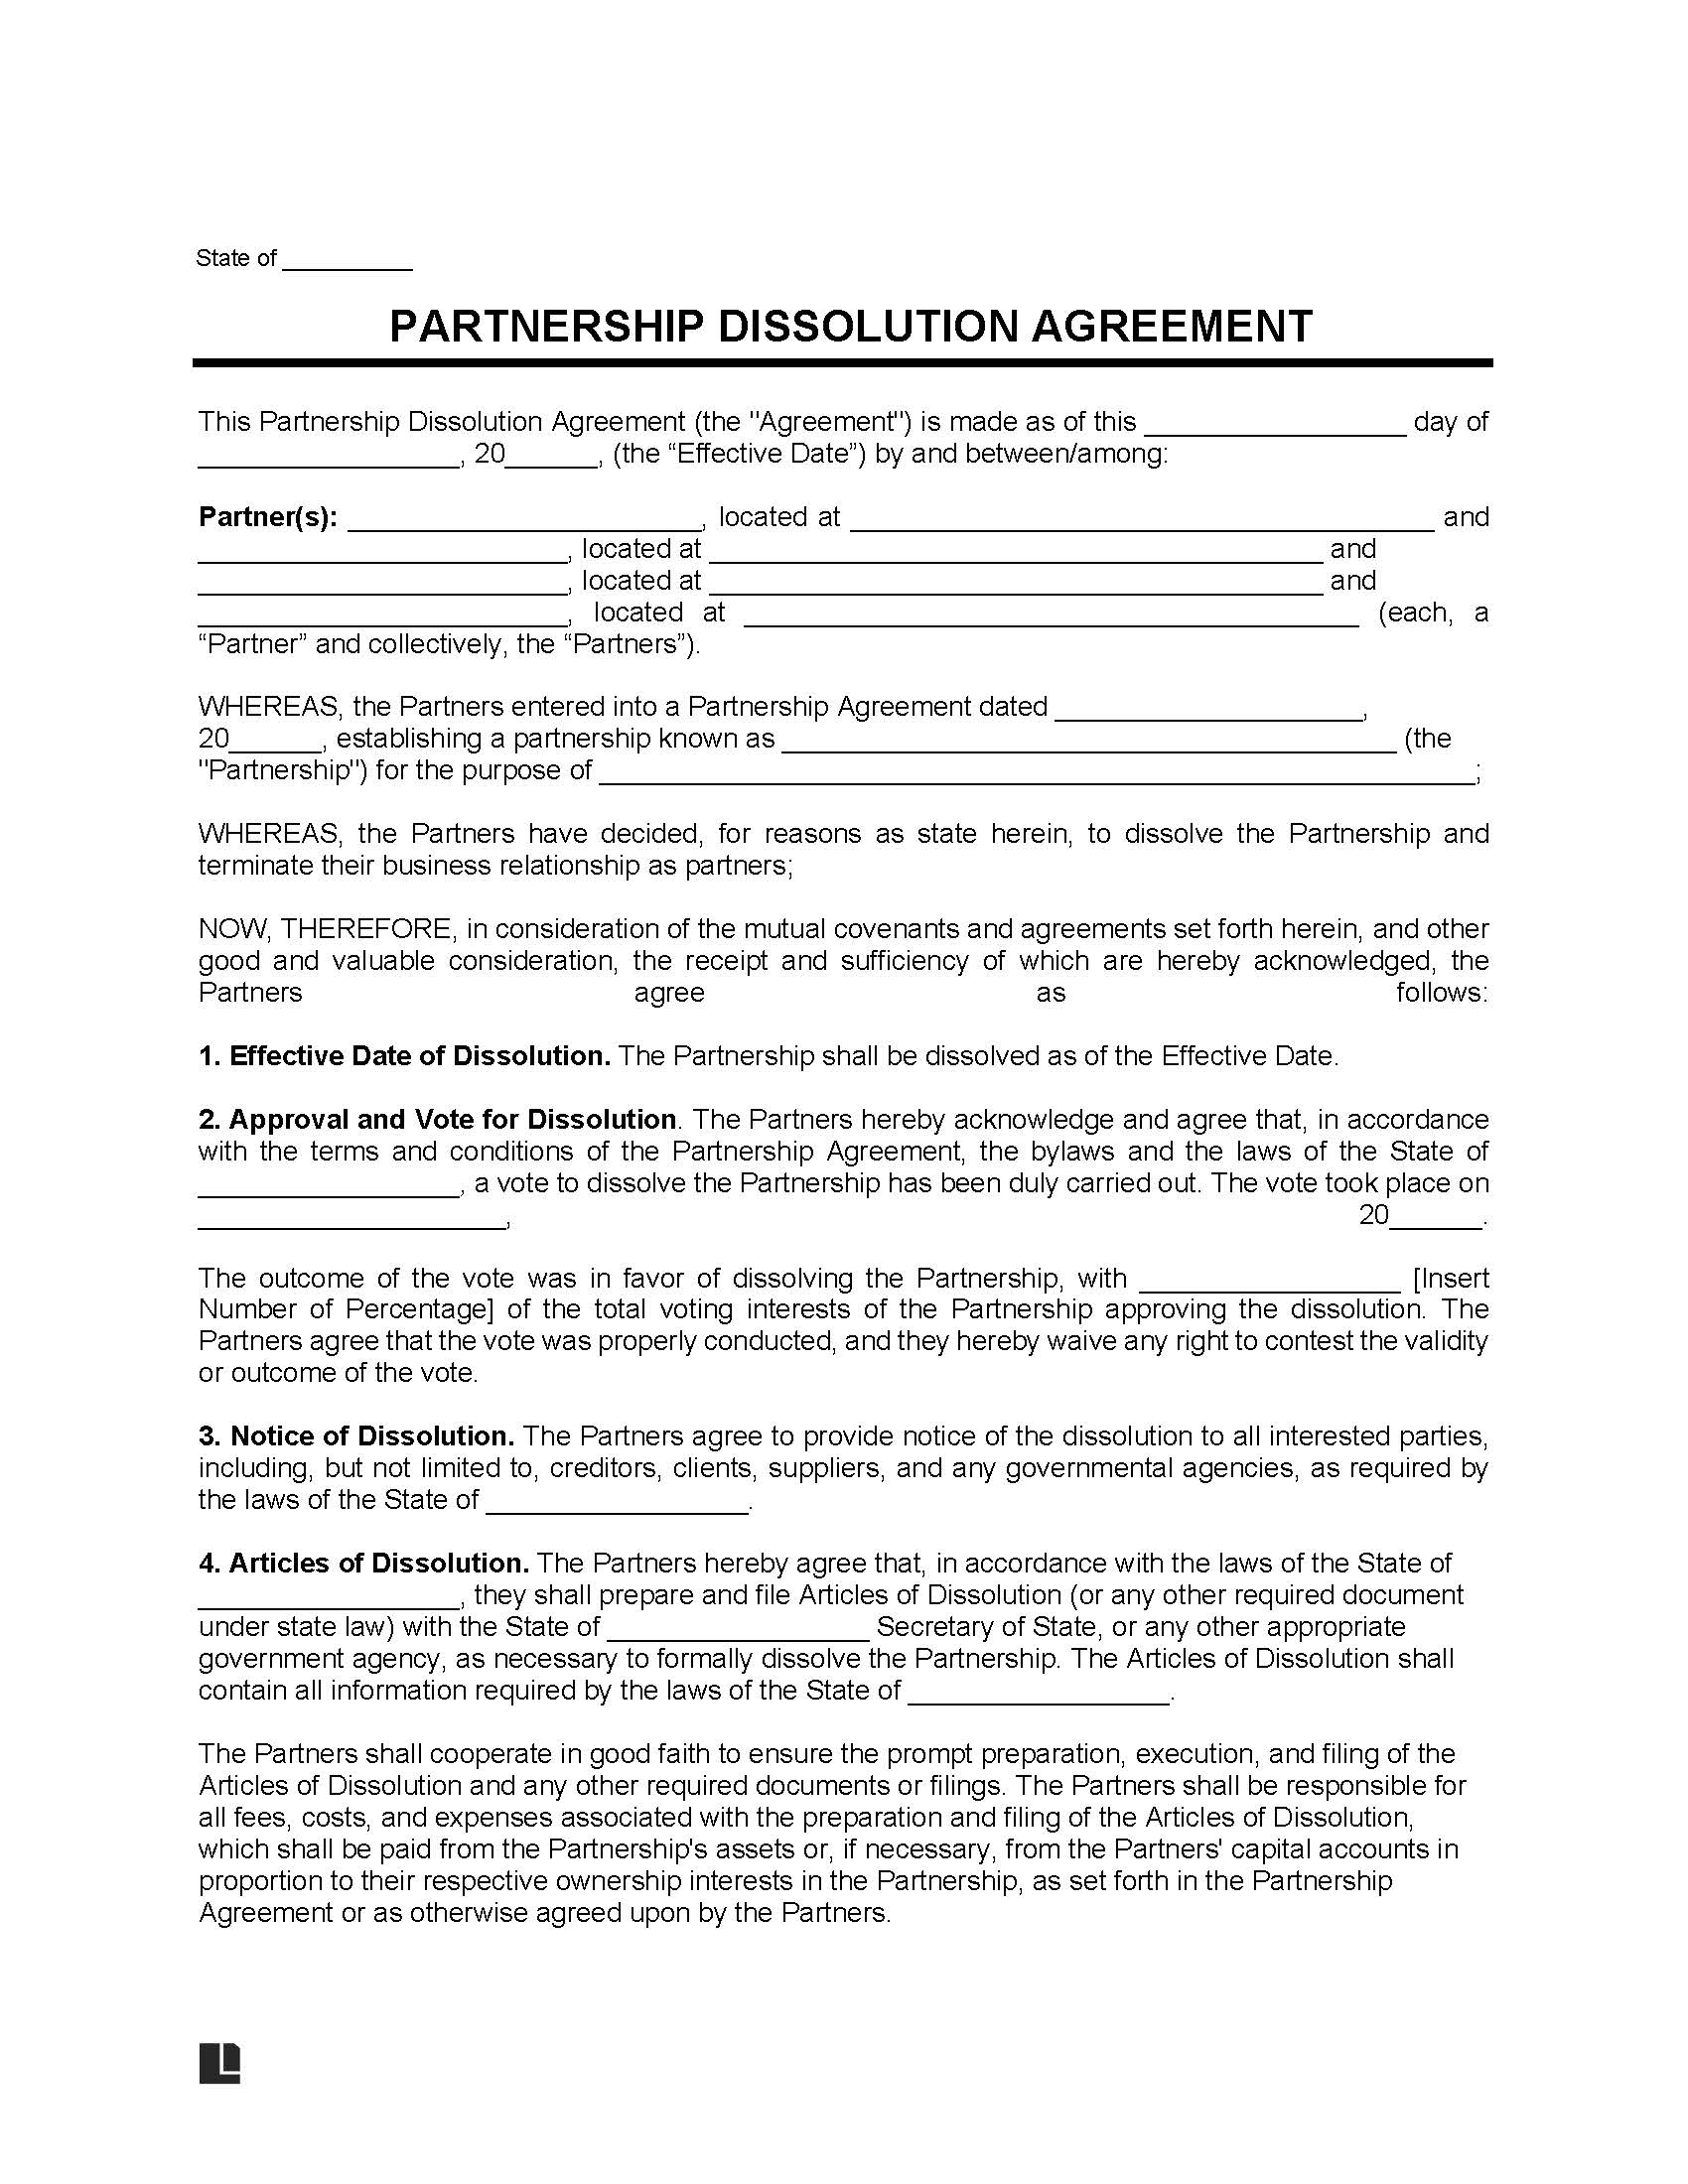 Partnership Dissolution Agreement